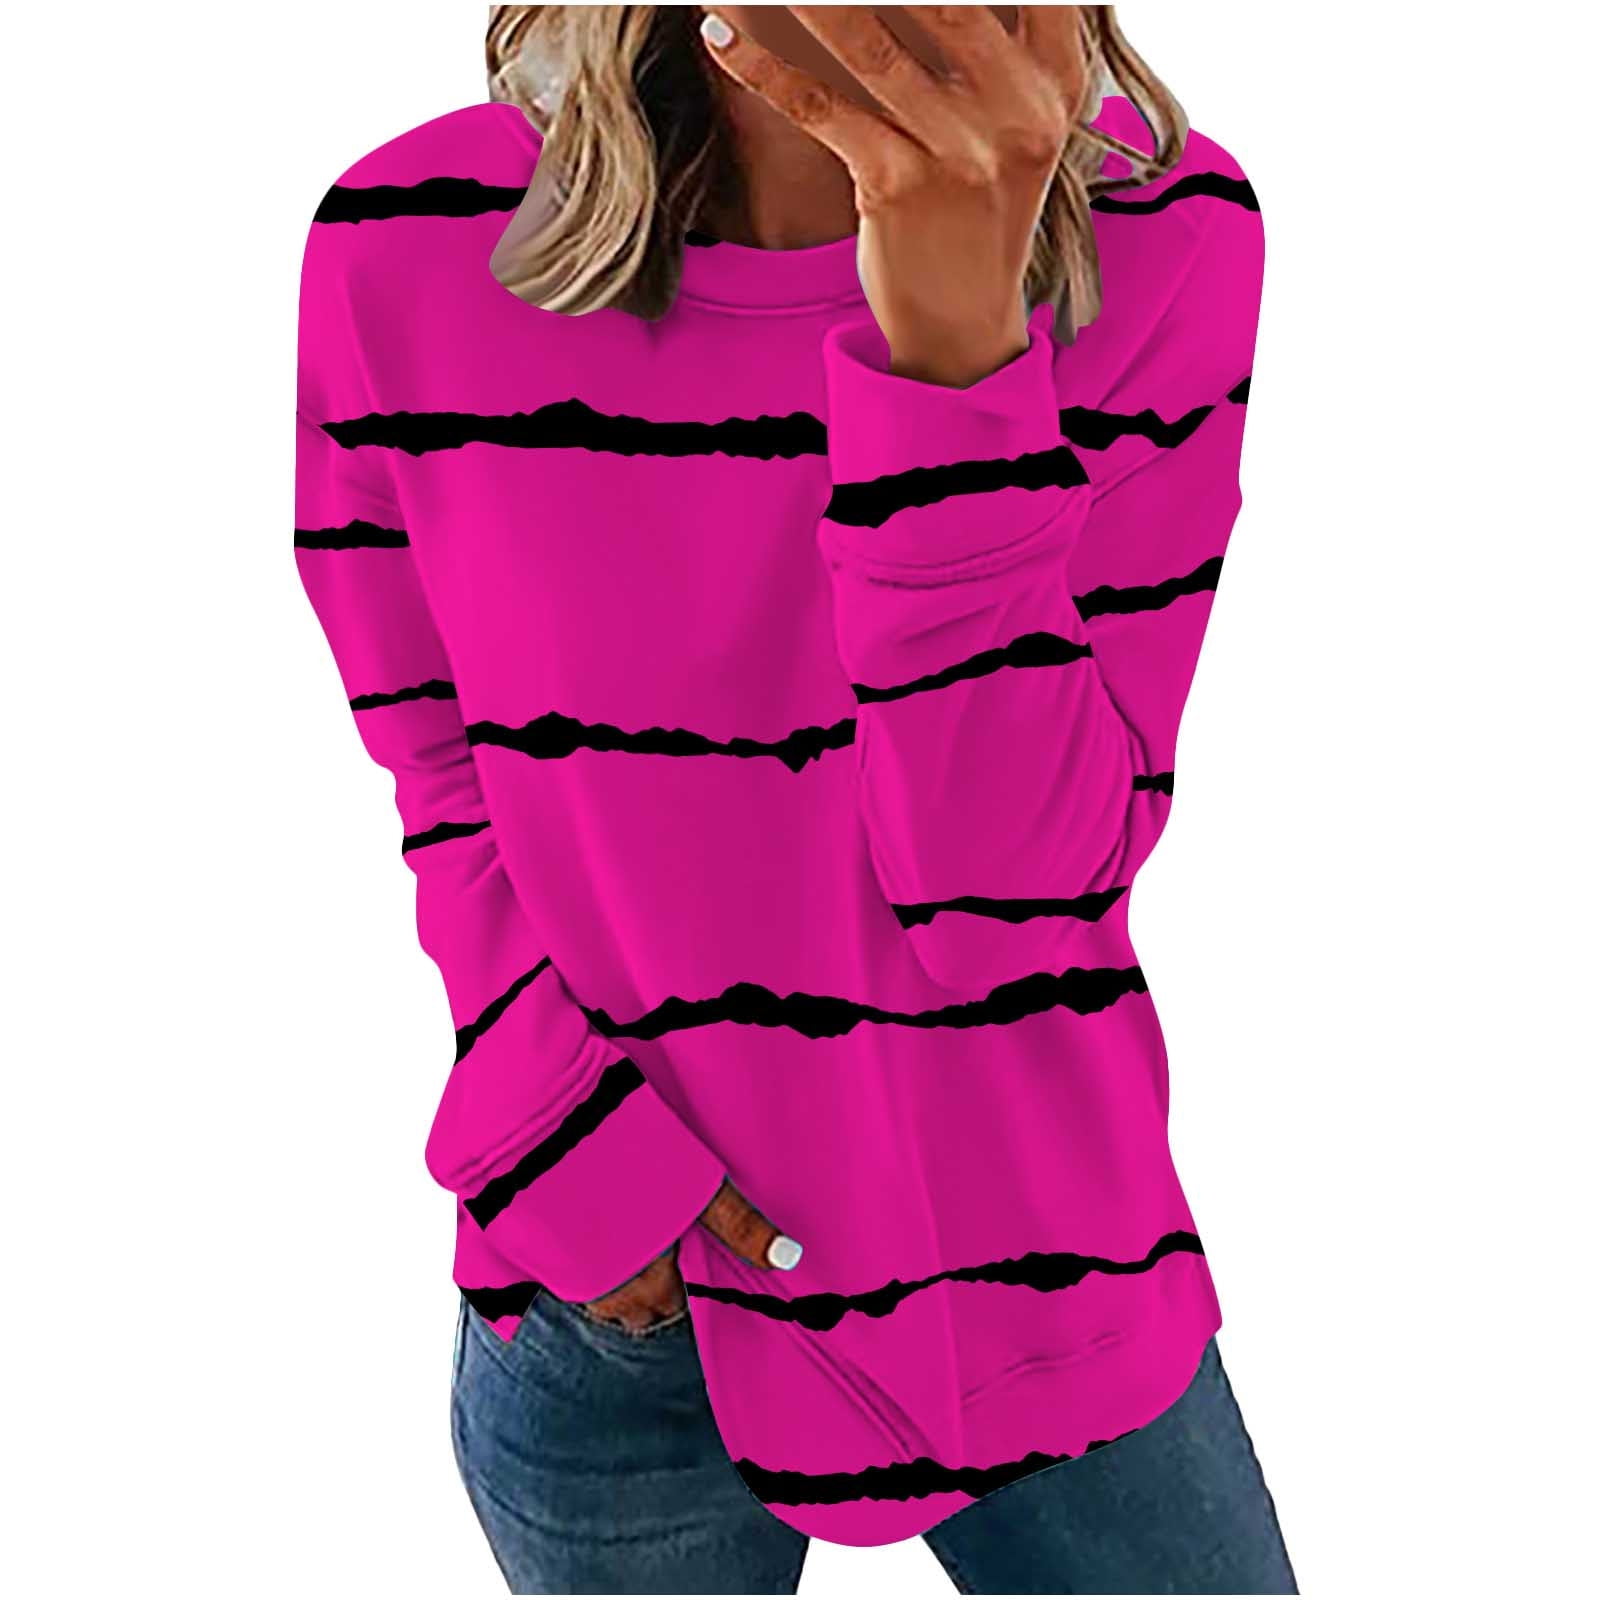 Hueook Sweatshirts for Women Plus Size Long Sleeve Zipper Printed ...